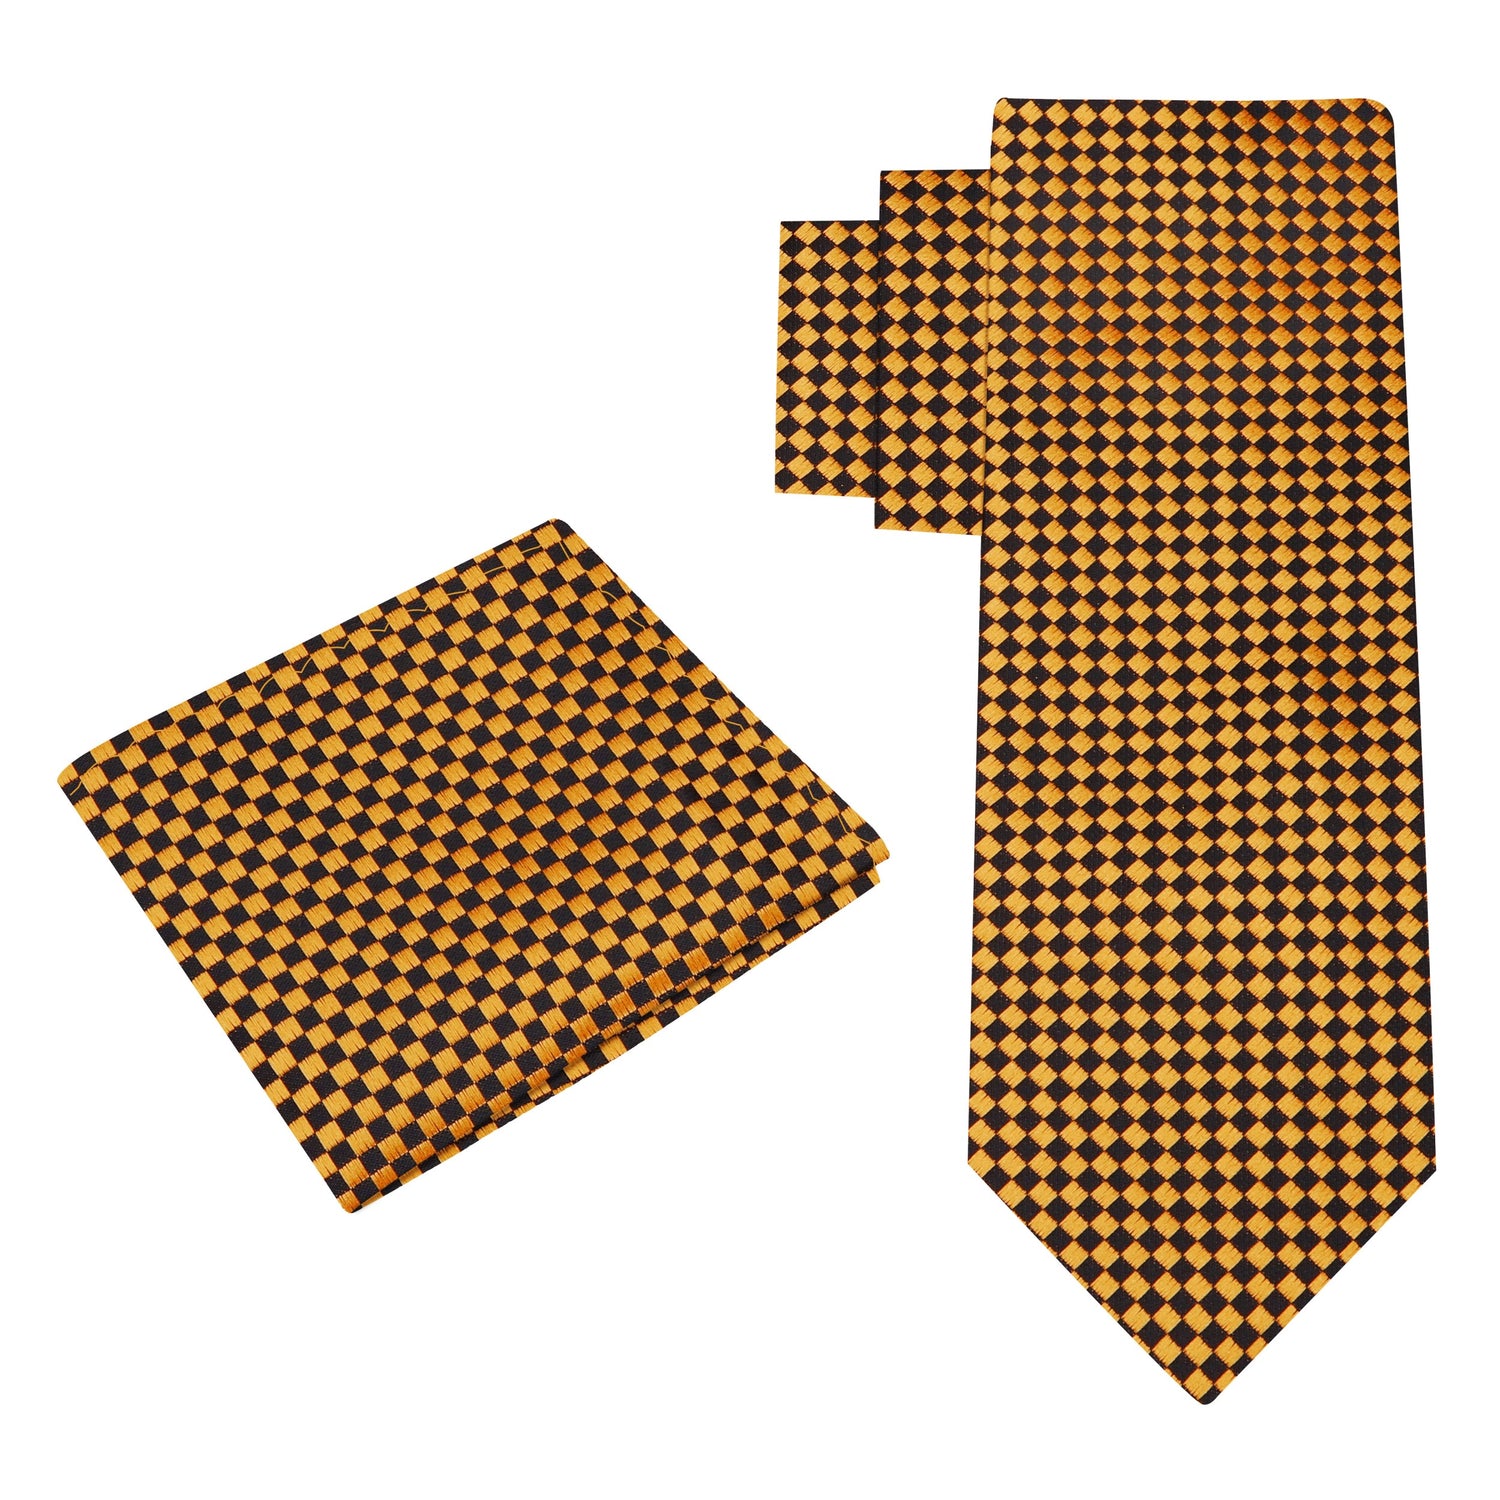 Alt view: A Gold, Black Check Pattern Silk Necktie, Matching Pocket Square